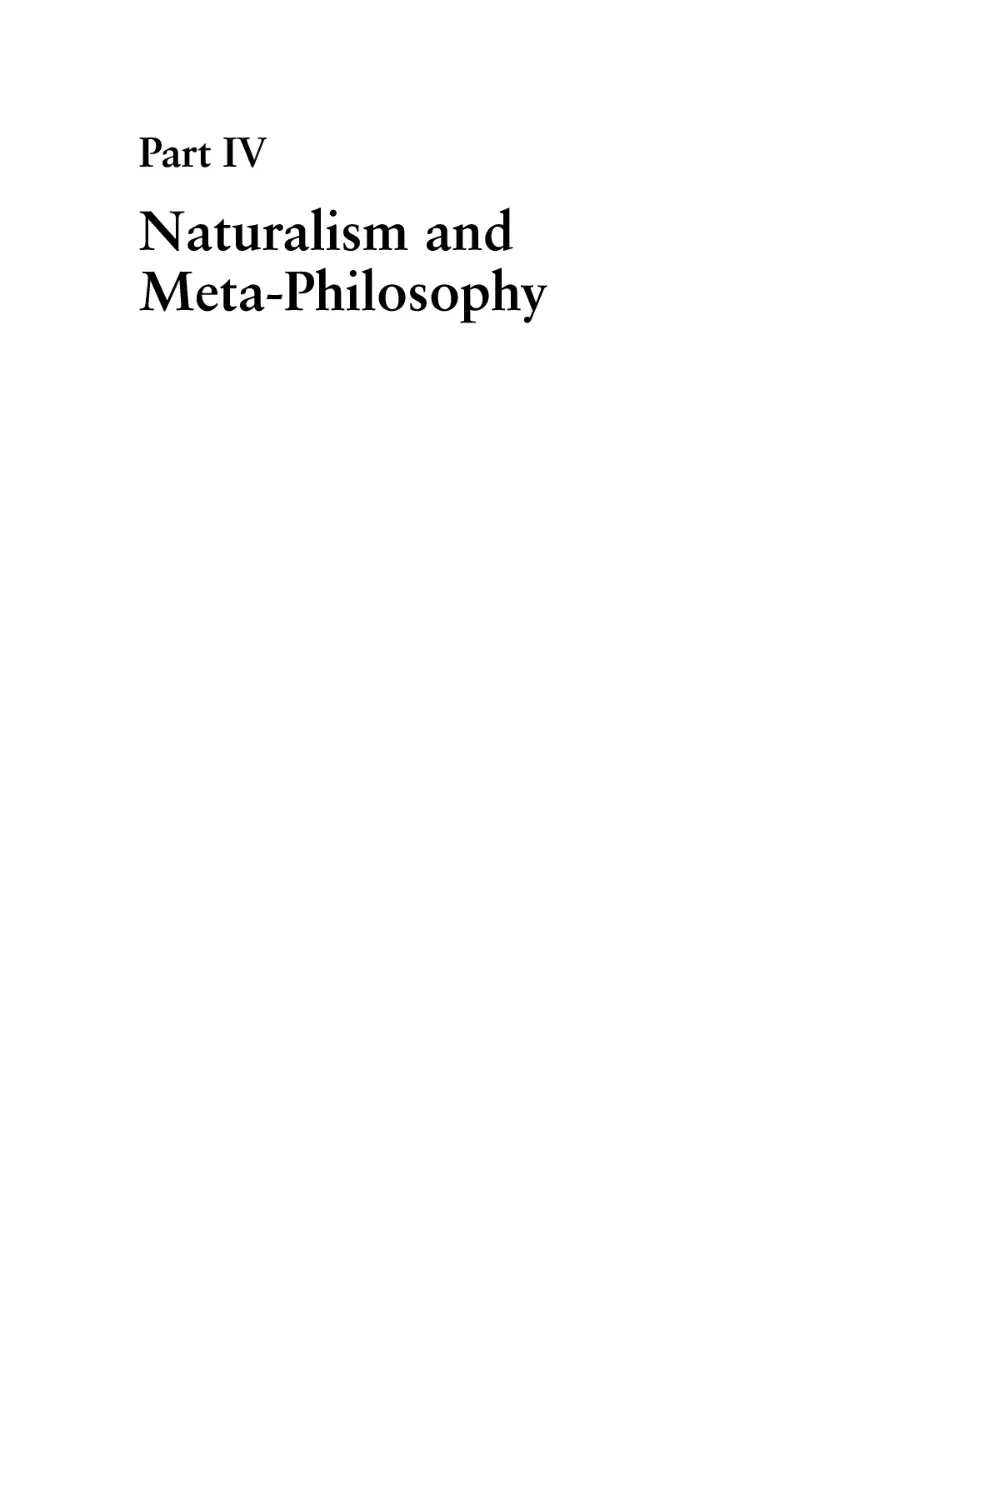 PART IV Naturalism and Meta-Philosophy